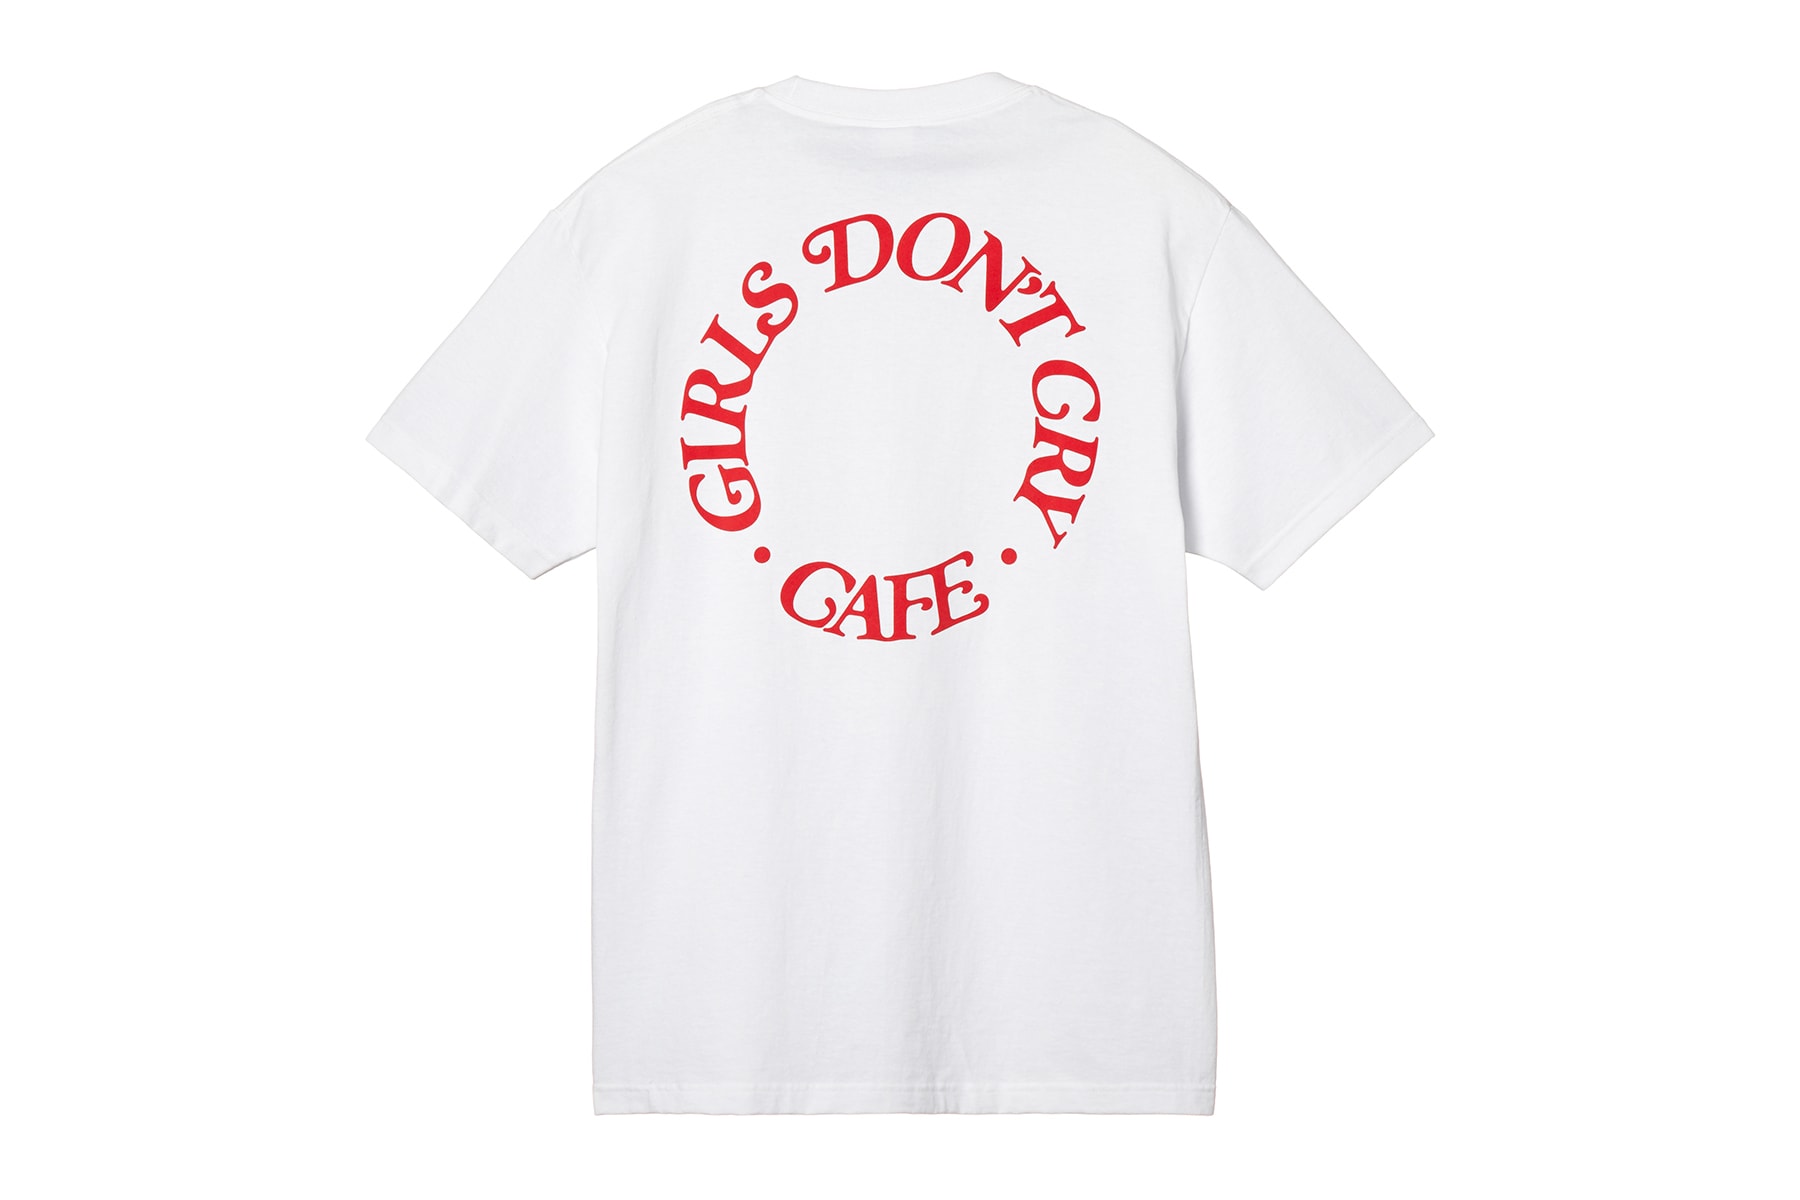 Girls Don't Cry x Amazon Fashion 全新聯乘「AT TOKYO」系列登場